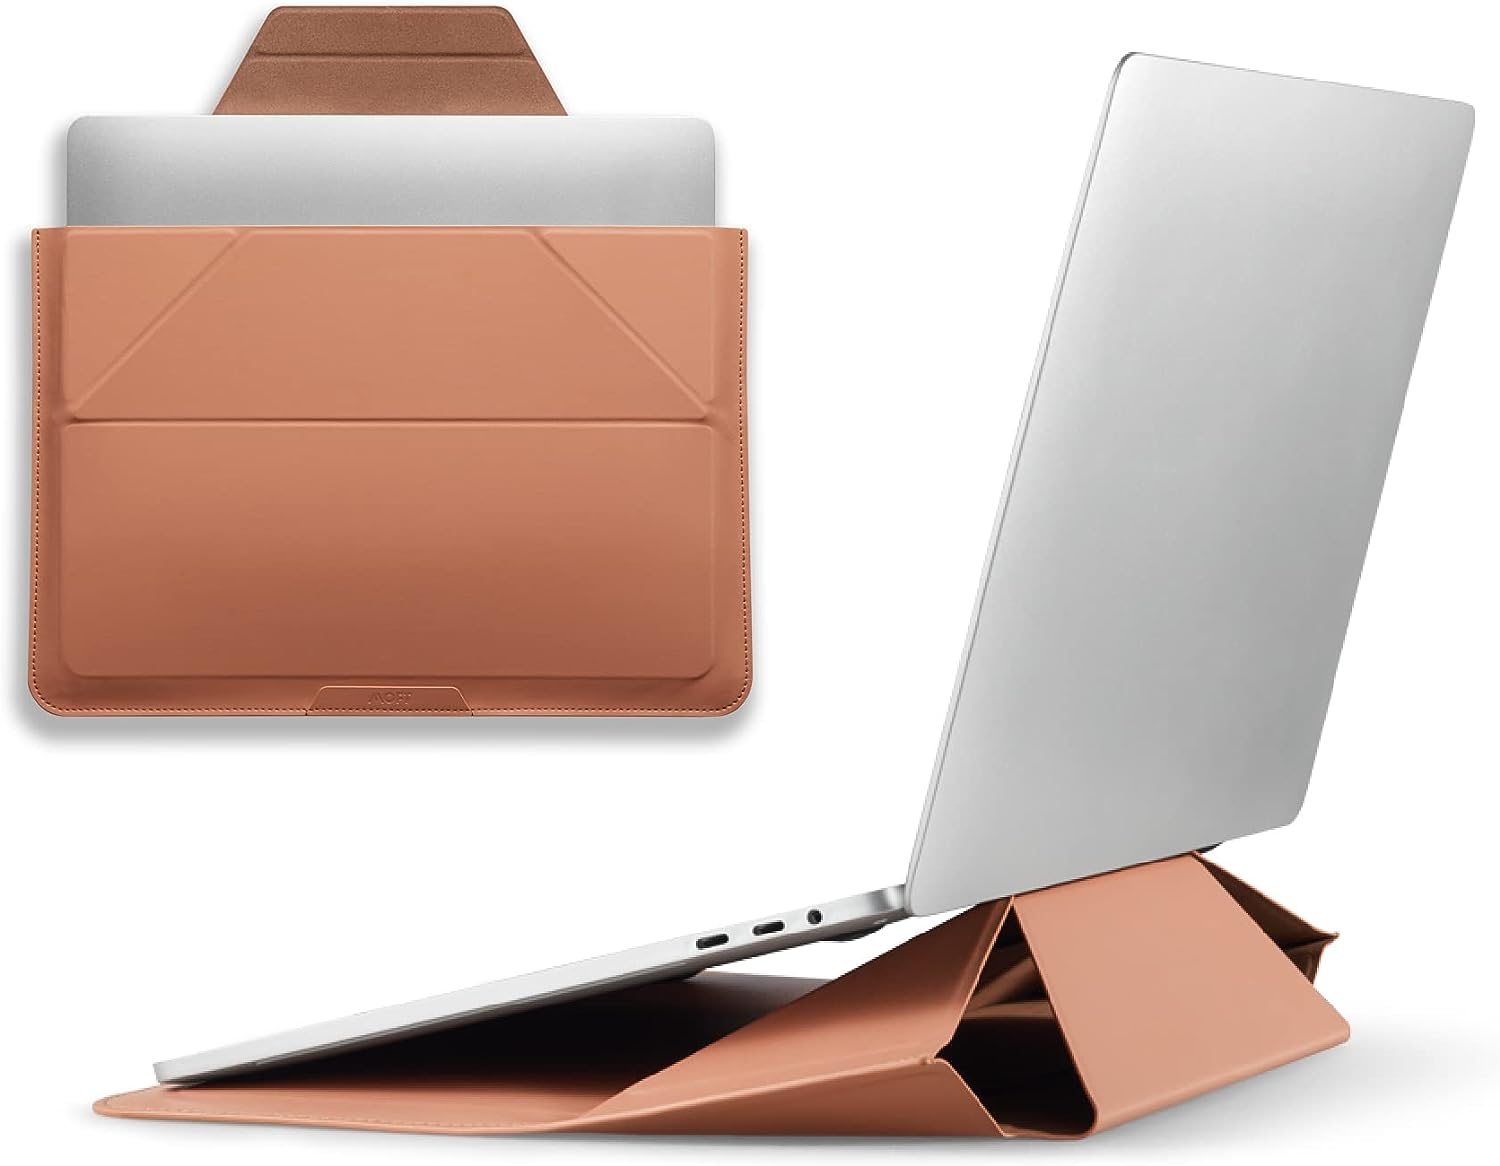 MOFT Laptop Bag Sleeve Review